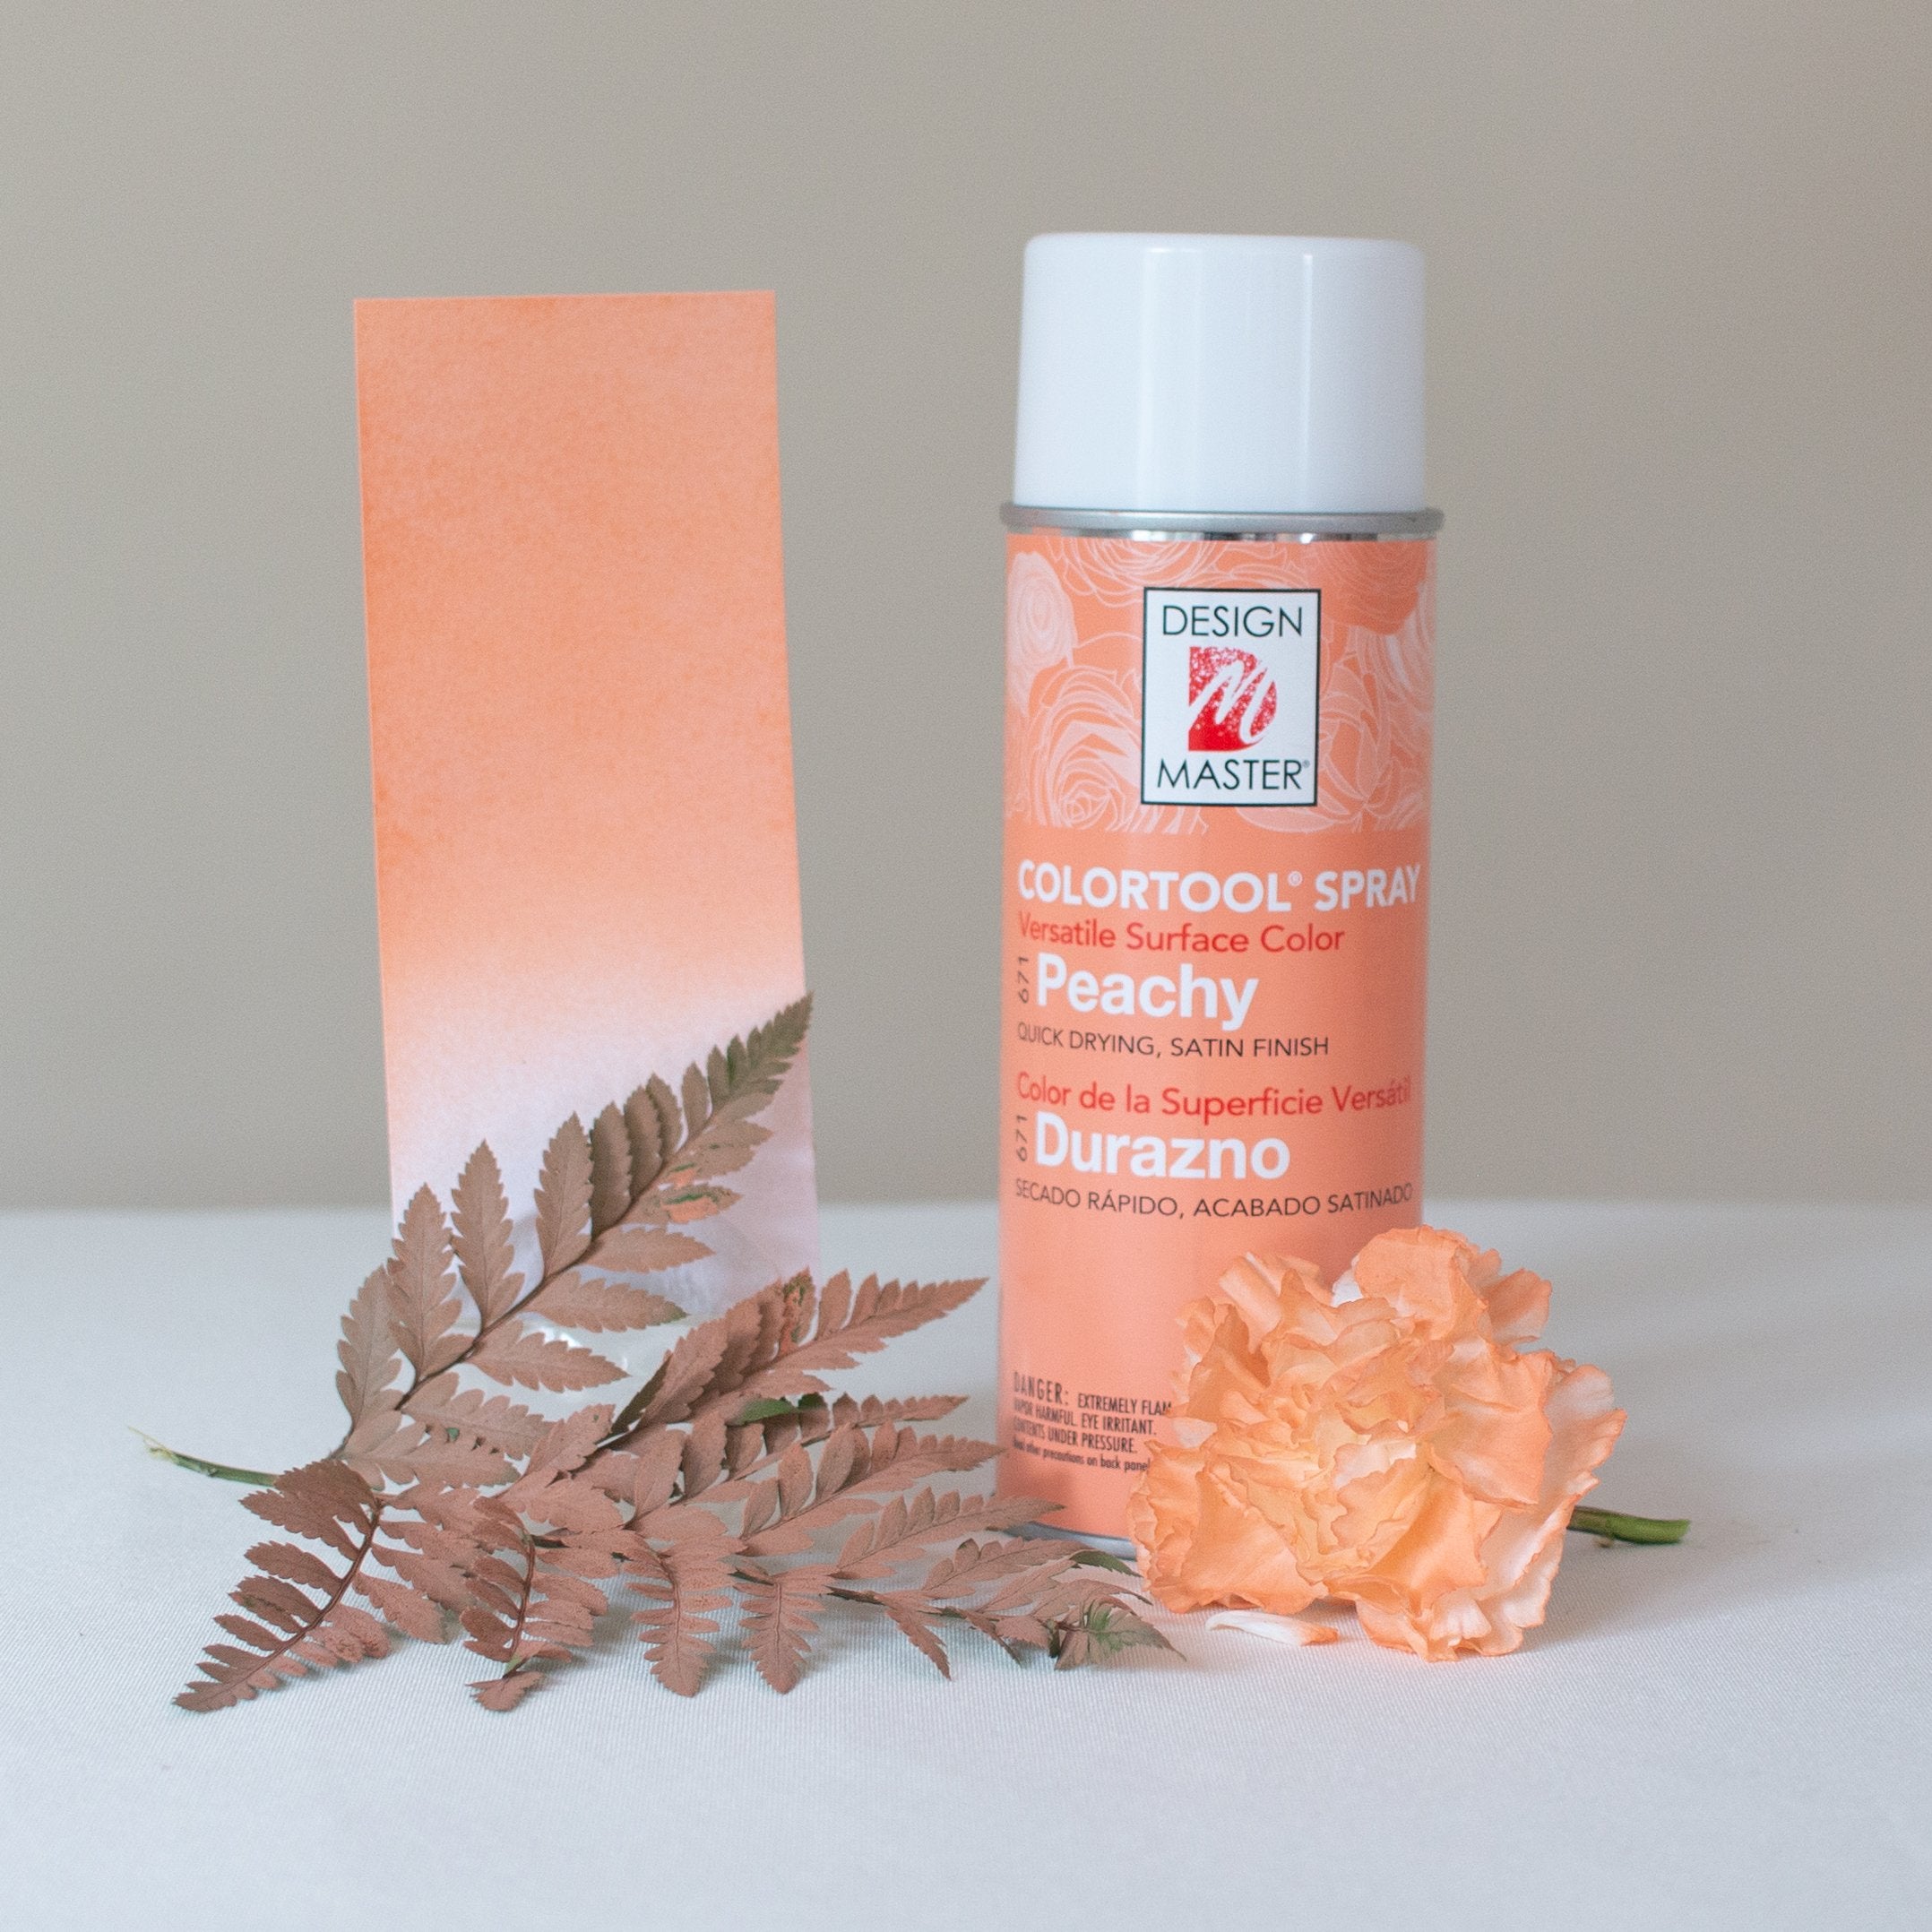 Peachy Design Master Colortool Floral Spray Paint